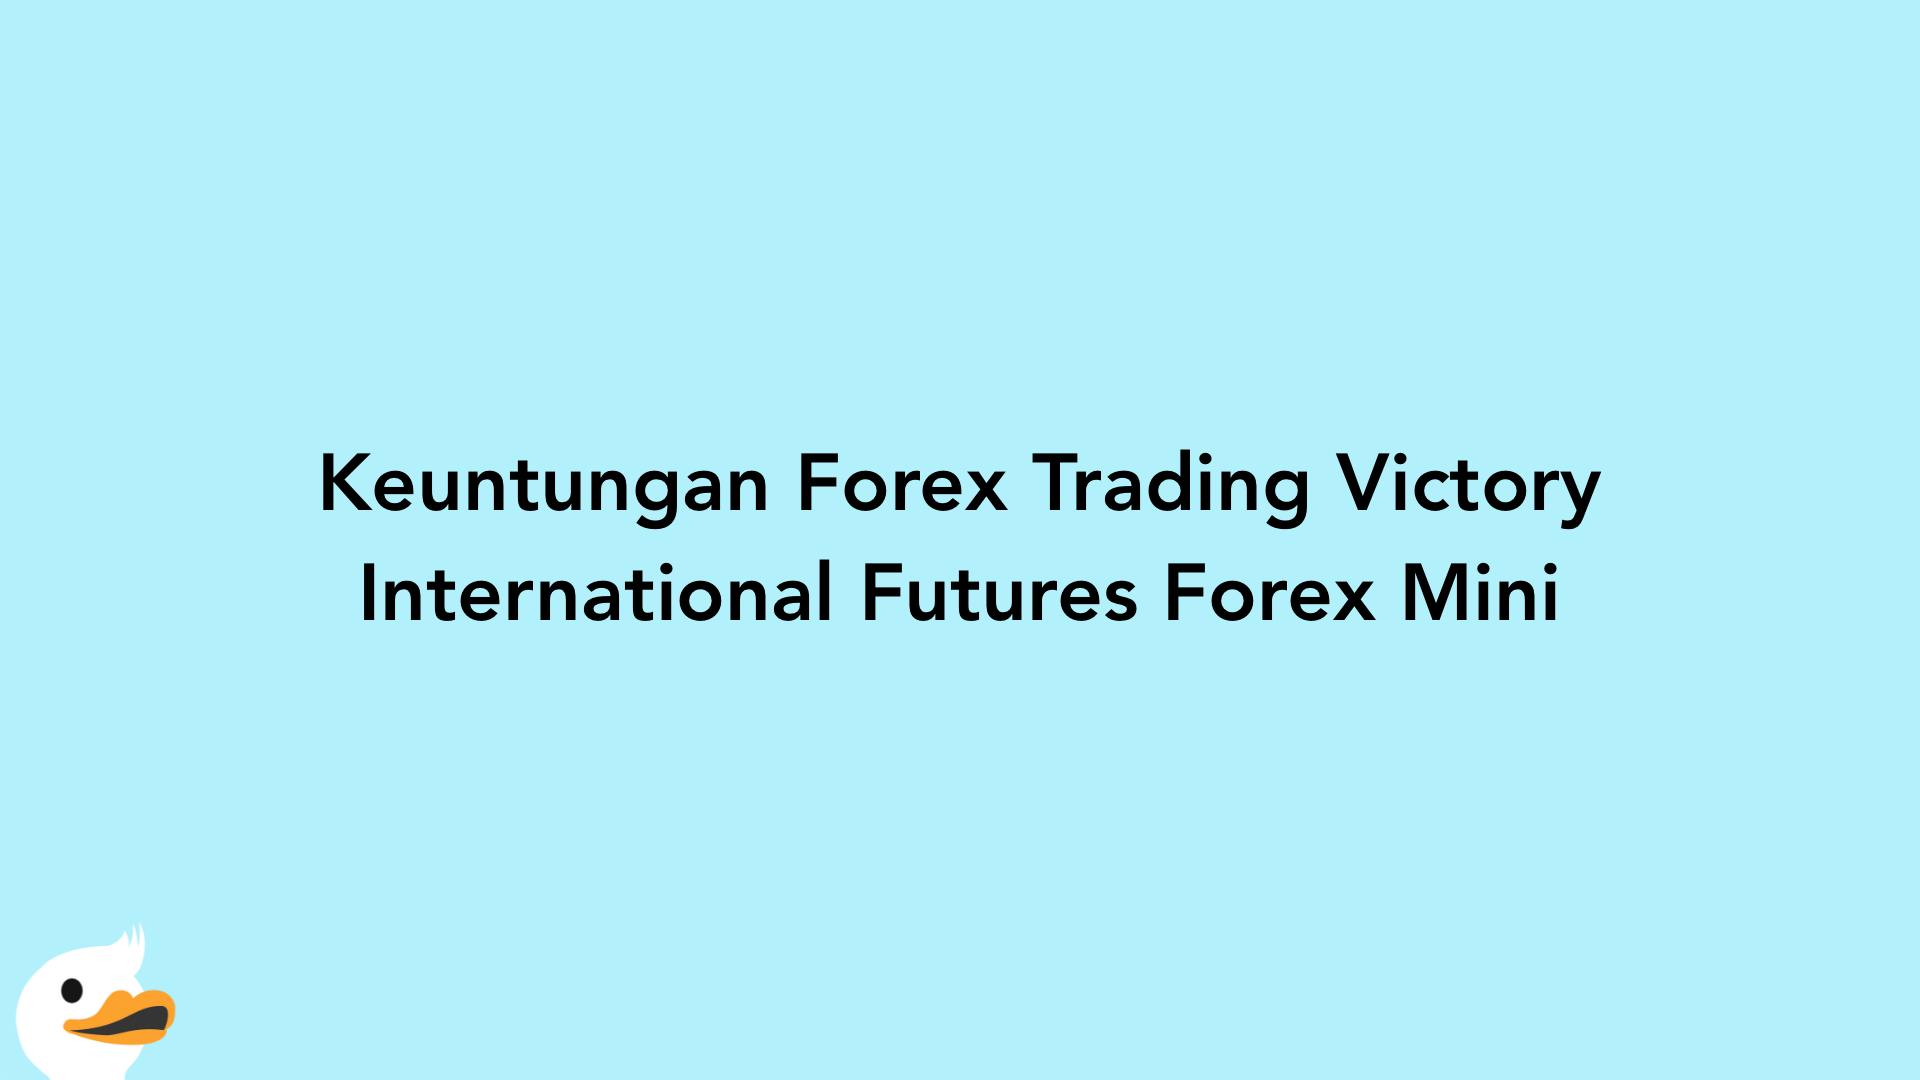 Keuntungan Forex Trading Victory International Futures Forex Mini